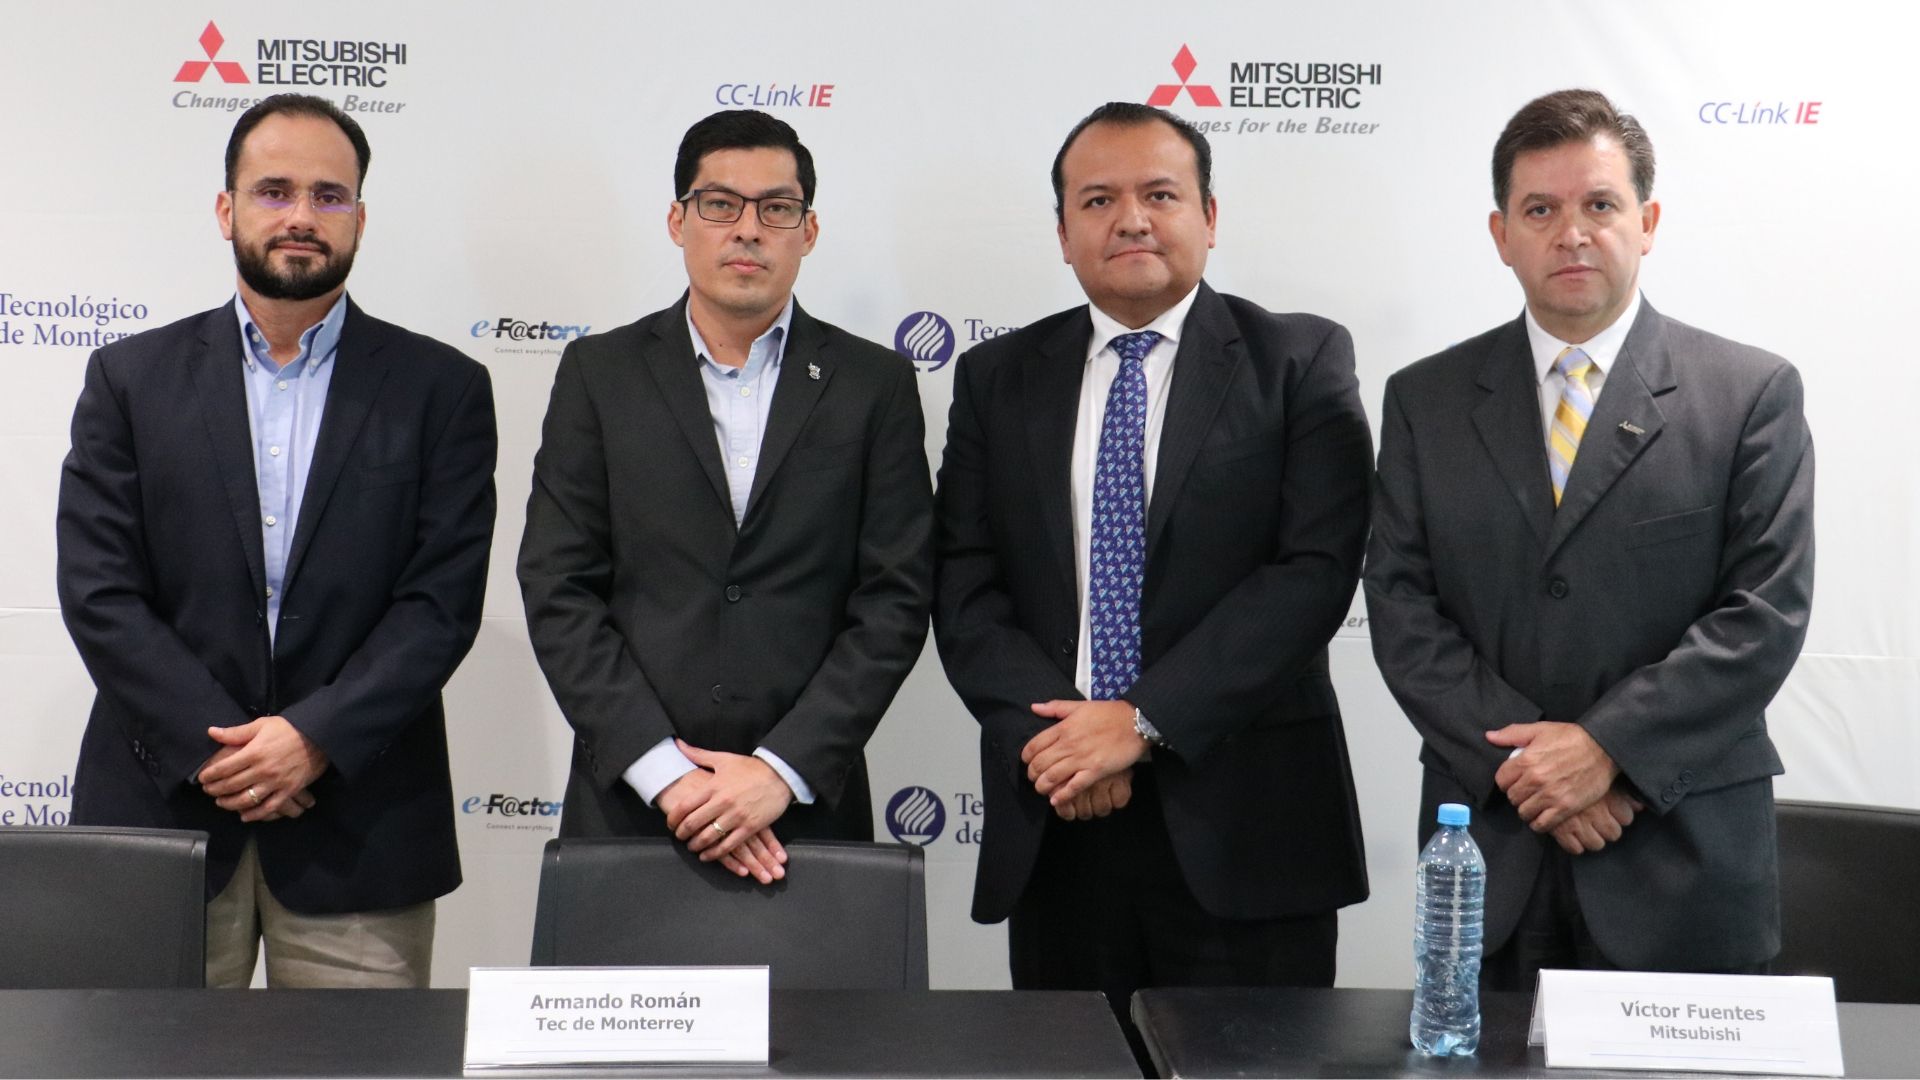 Tecnologico de Monterrey and Mitsubishi signed a collaboration agreement